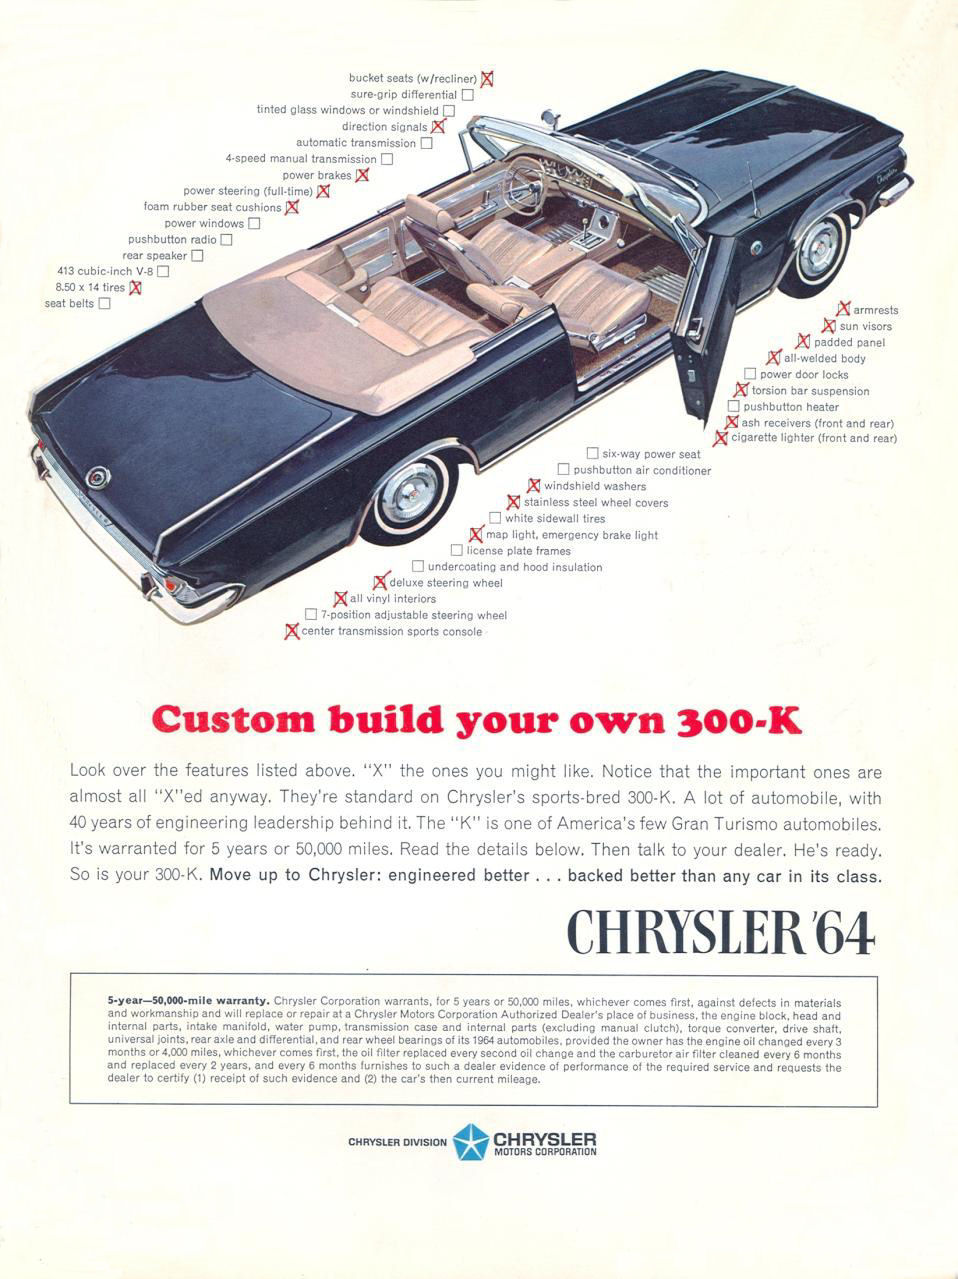 1964 Chrysler Auto Advertising